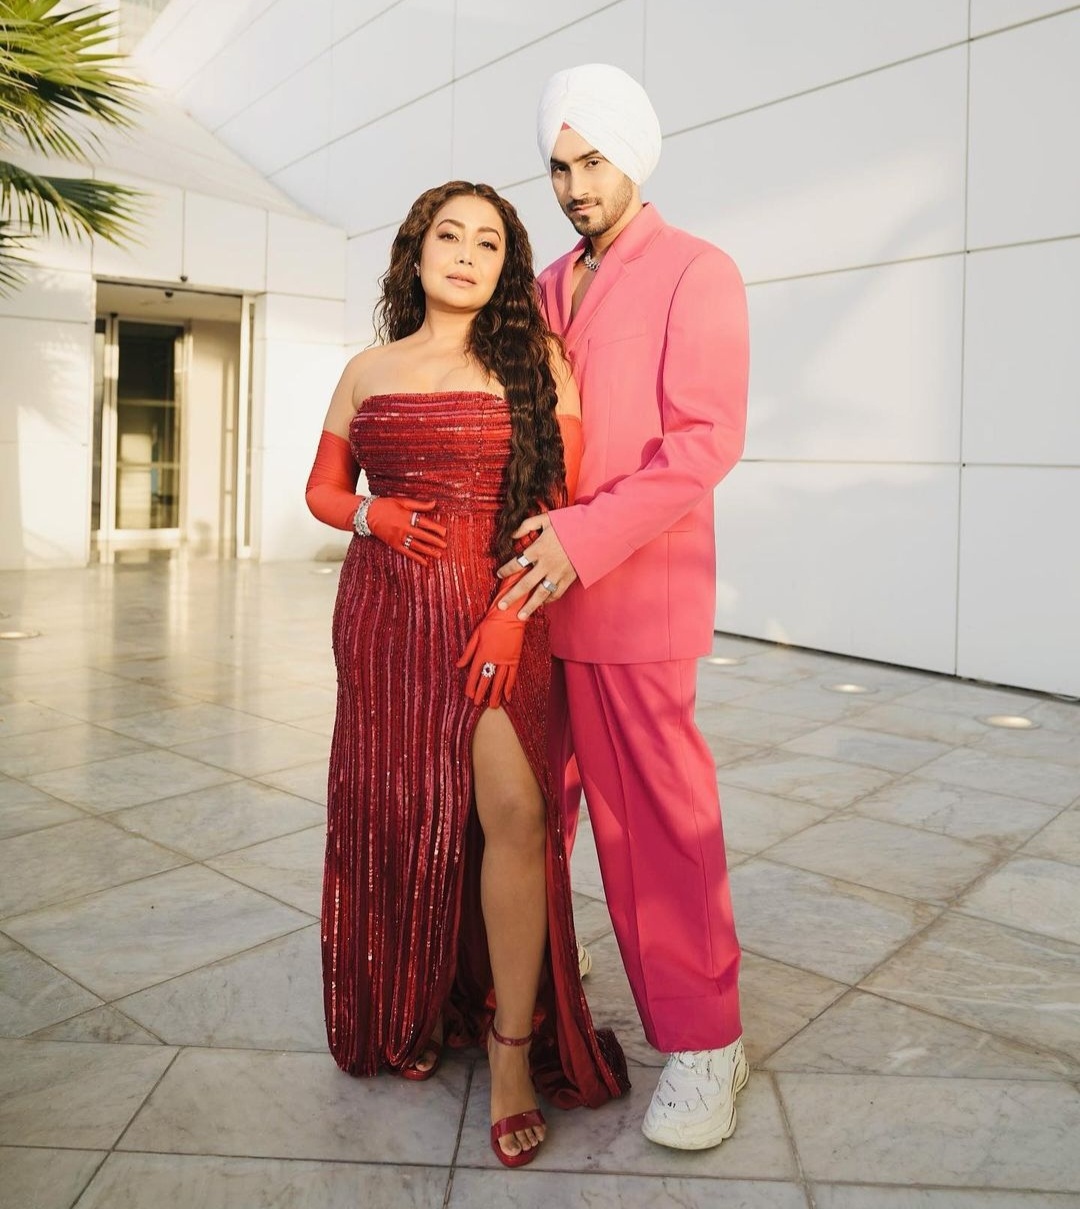 Rohanpreet Singh wishes his ‘Goddess’ Neha Kakkar in a special post